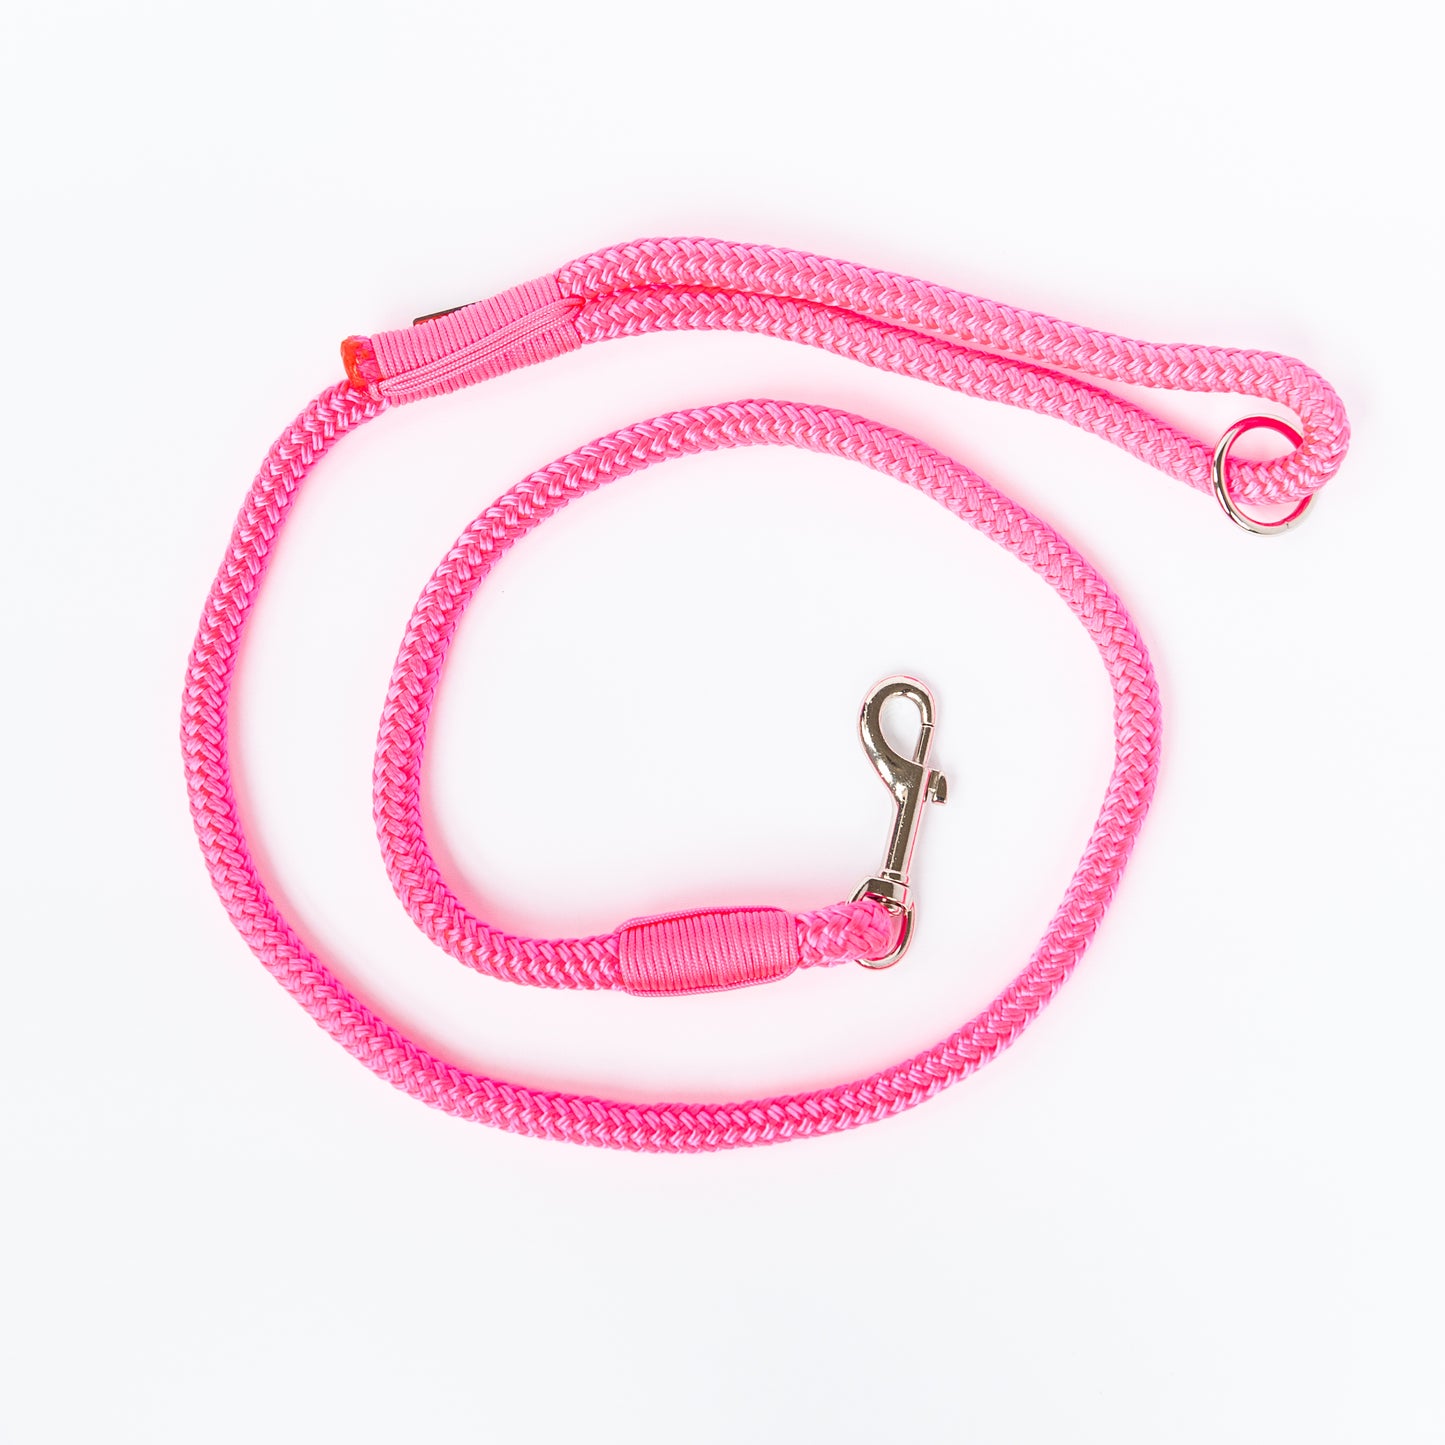 Neon Pink Rope Dog Leash